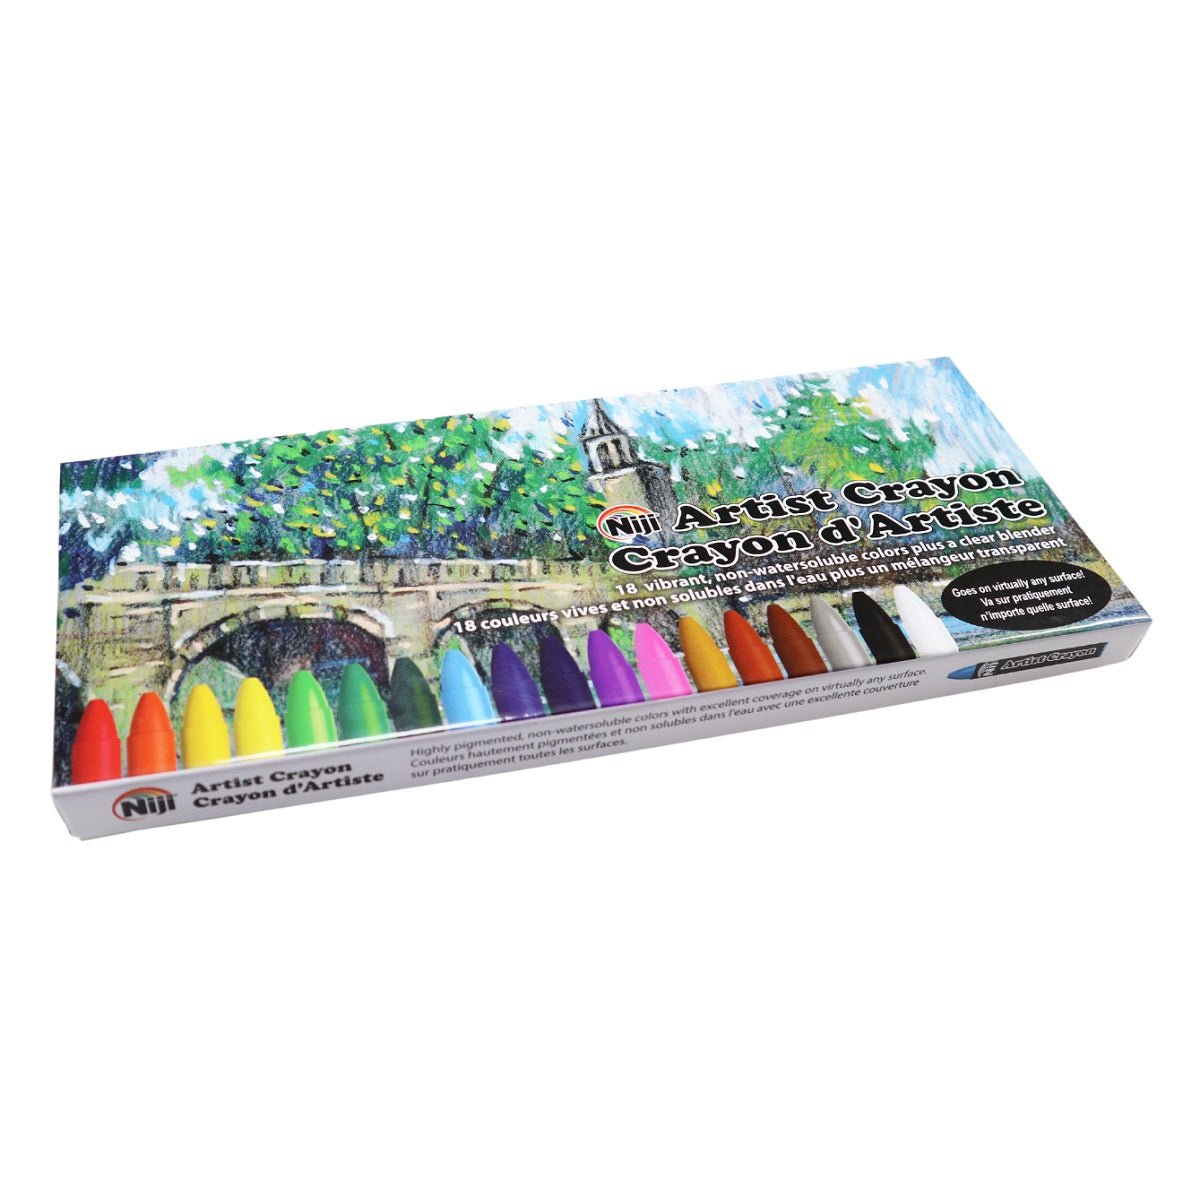 Yasutomo Niji Artist Crayons (Non Water Soluble) - 18 Colors 